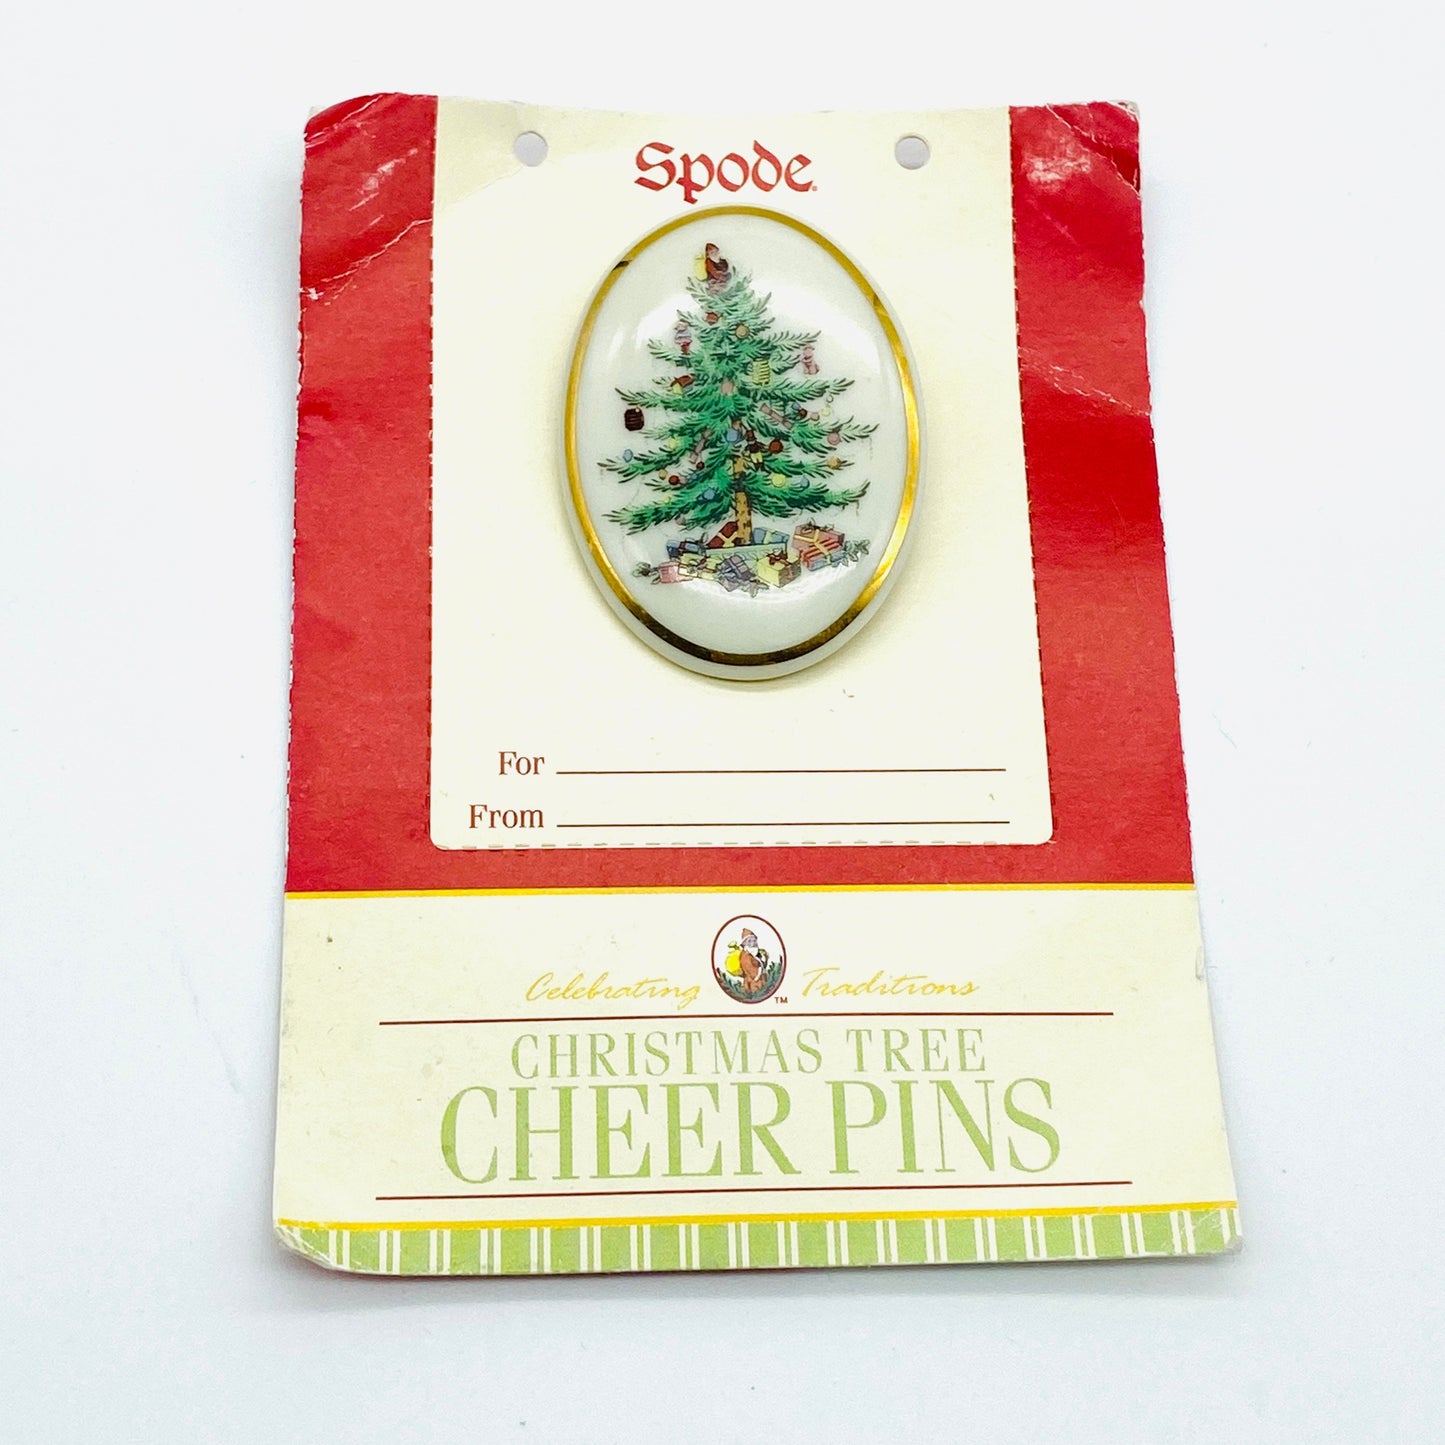 Spode Christmas Tree Cheer Pin on Original Card